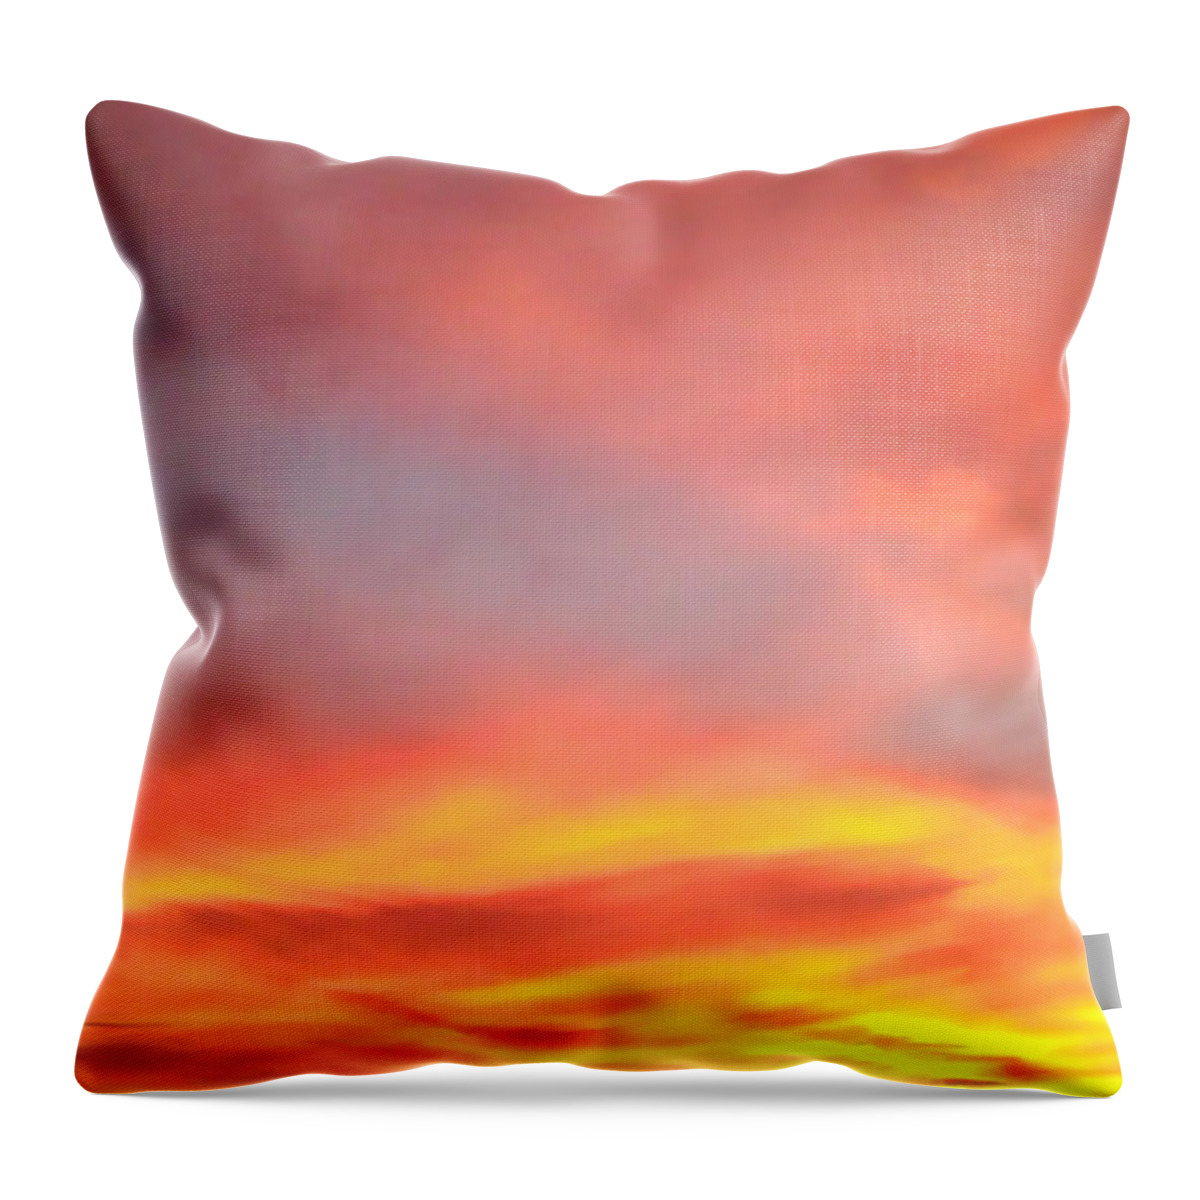 Zedi Throw Pillow featuring the photograph Sunset 4 by Ze Di